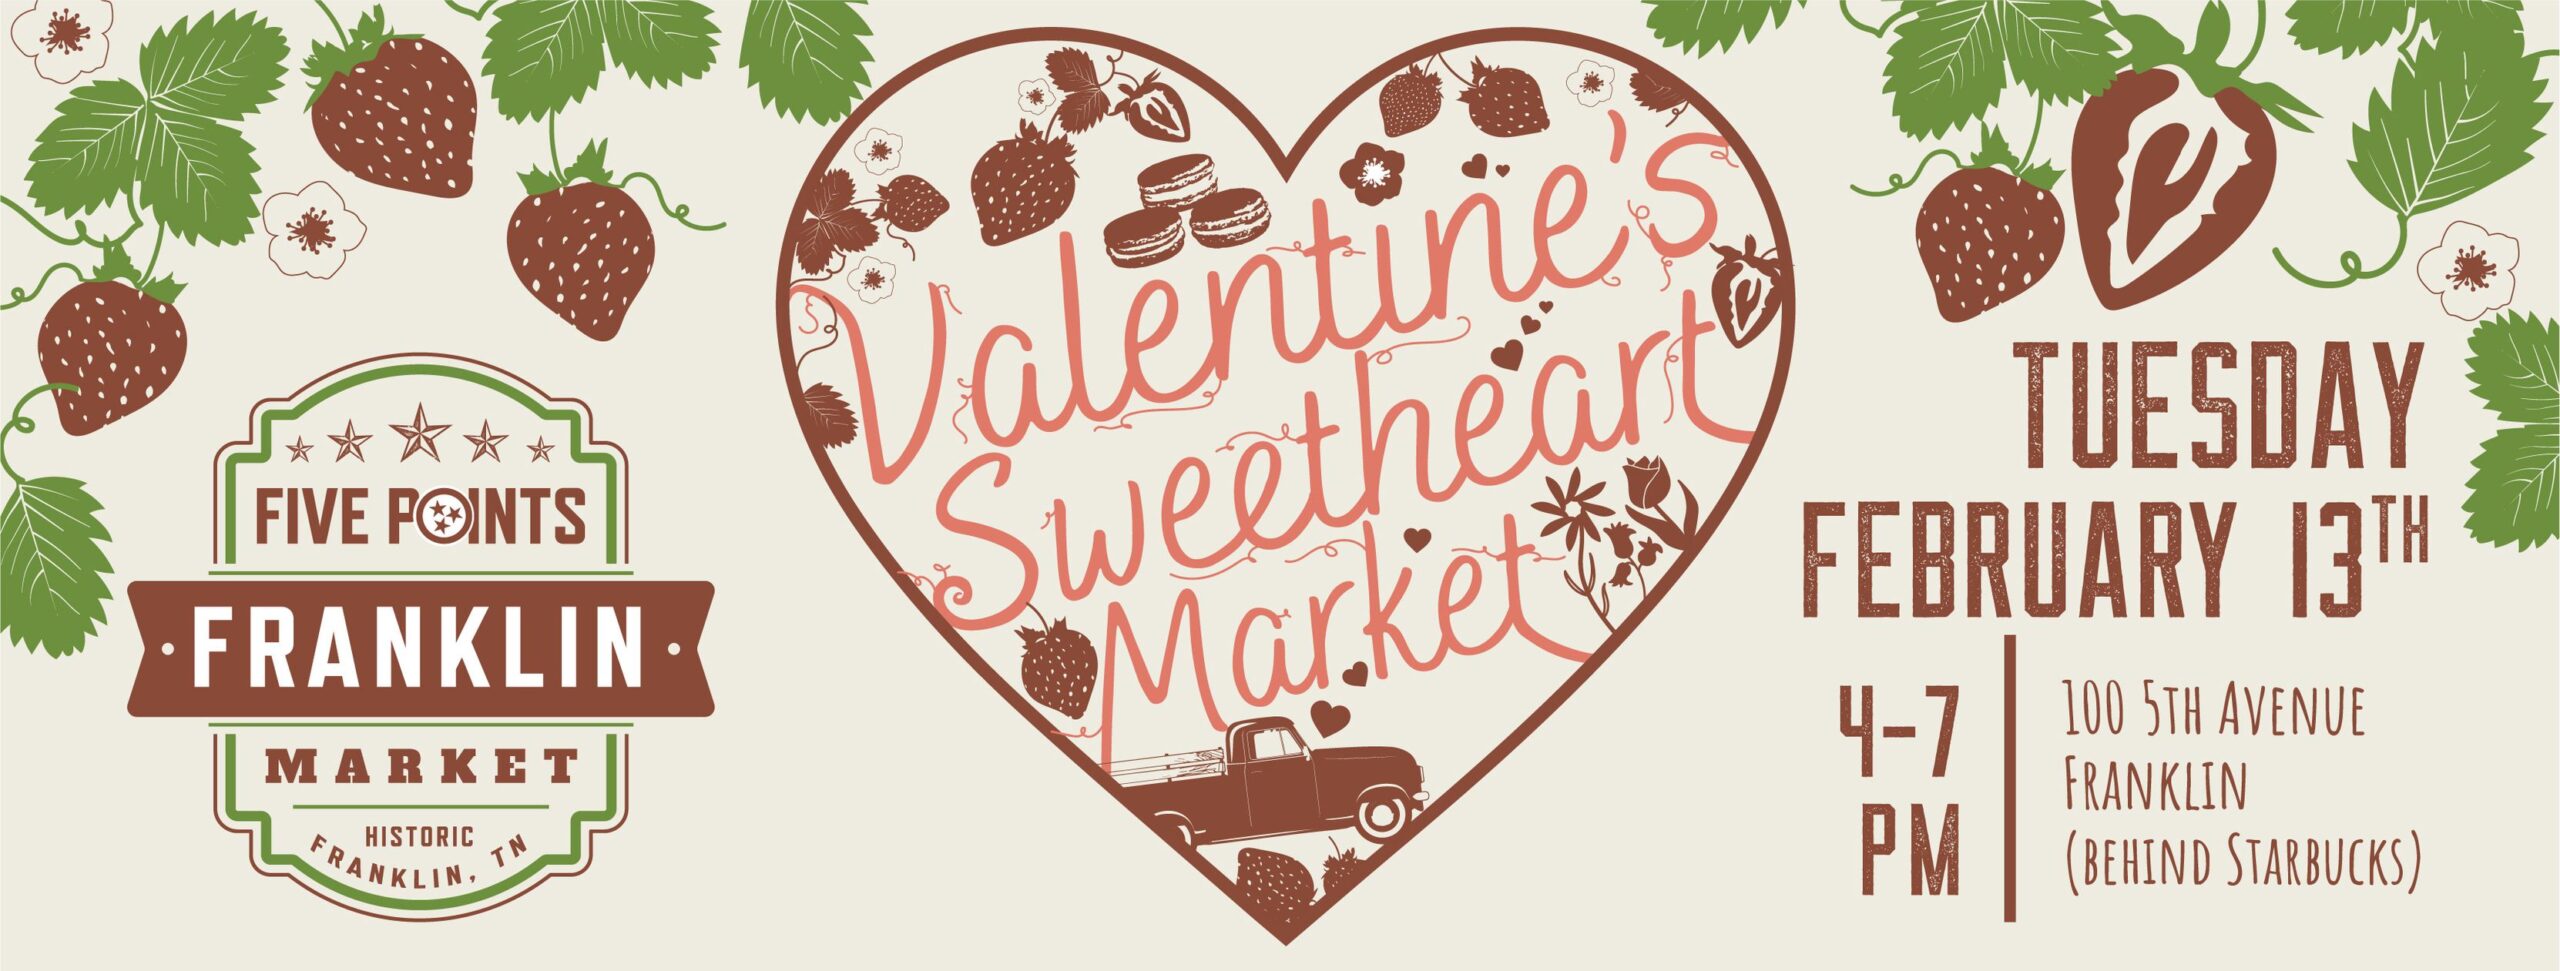 valentine's sweetheart market five points franklin market